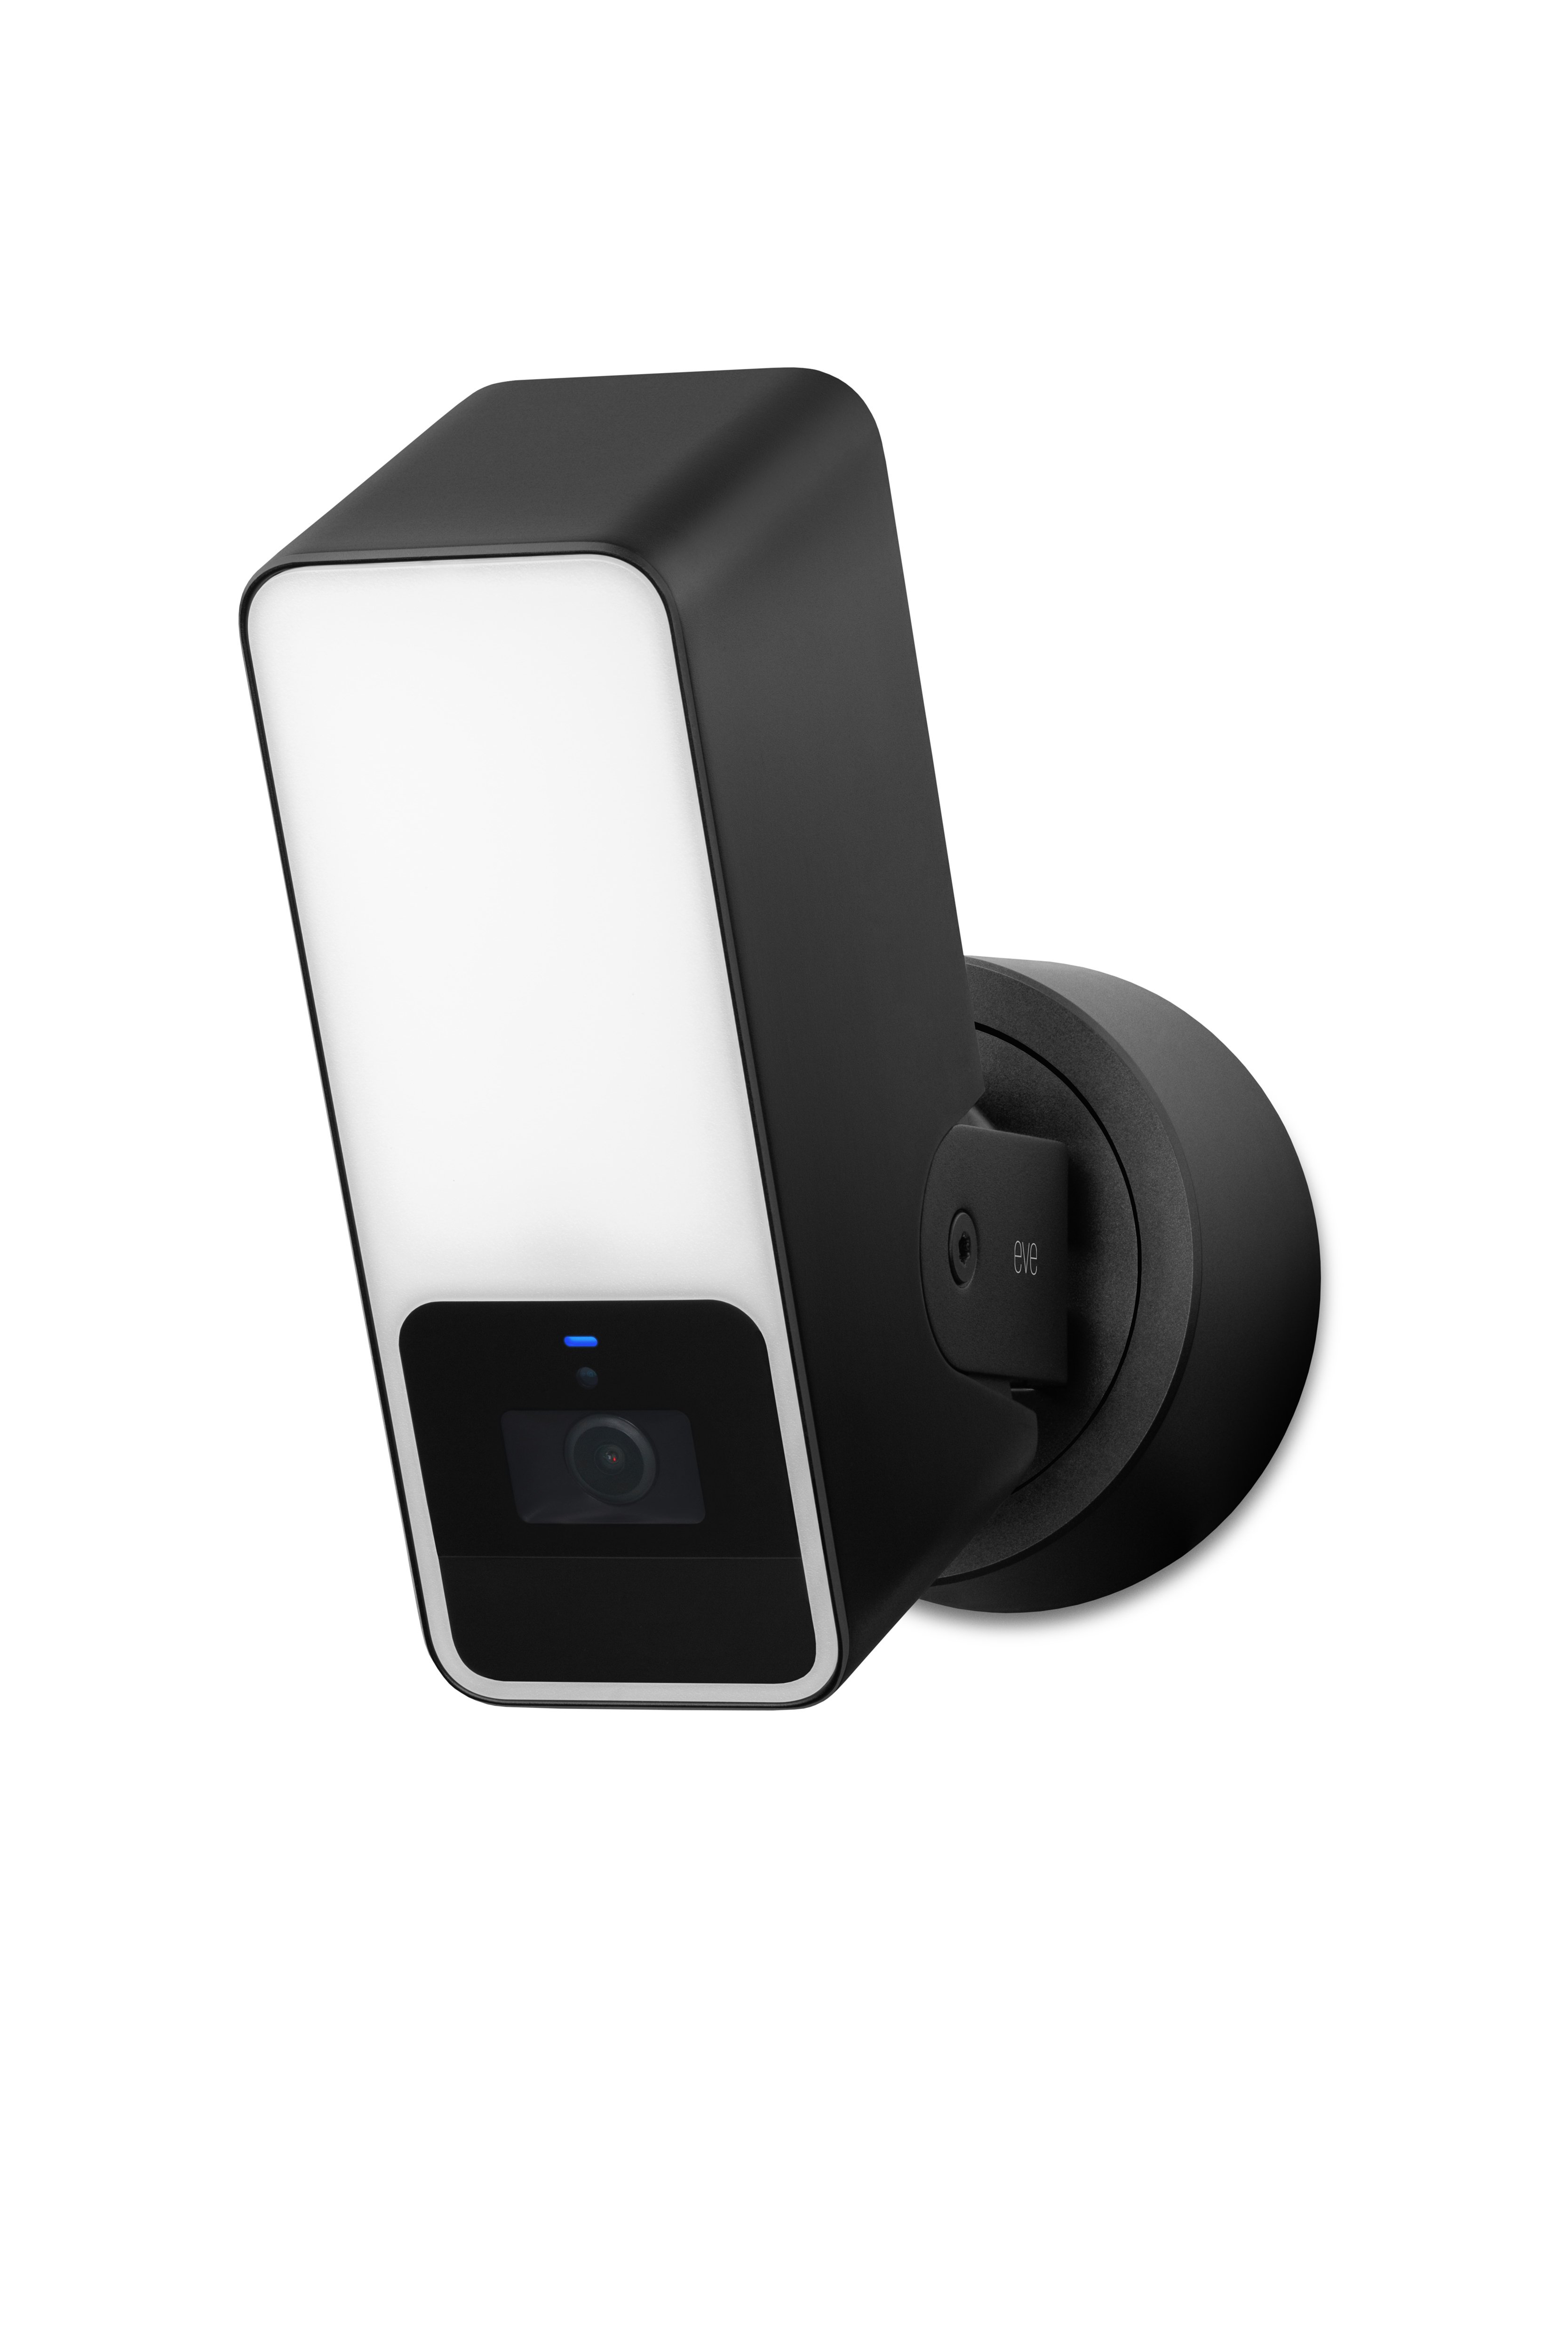 Eve - Outdoor Cam - Secure floodlight camera with Apple HomeKit Secure Video technology - Elektronikk